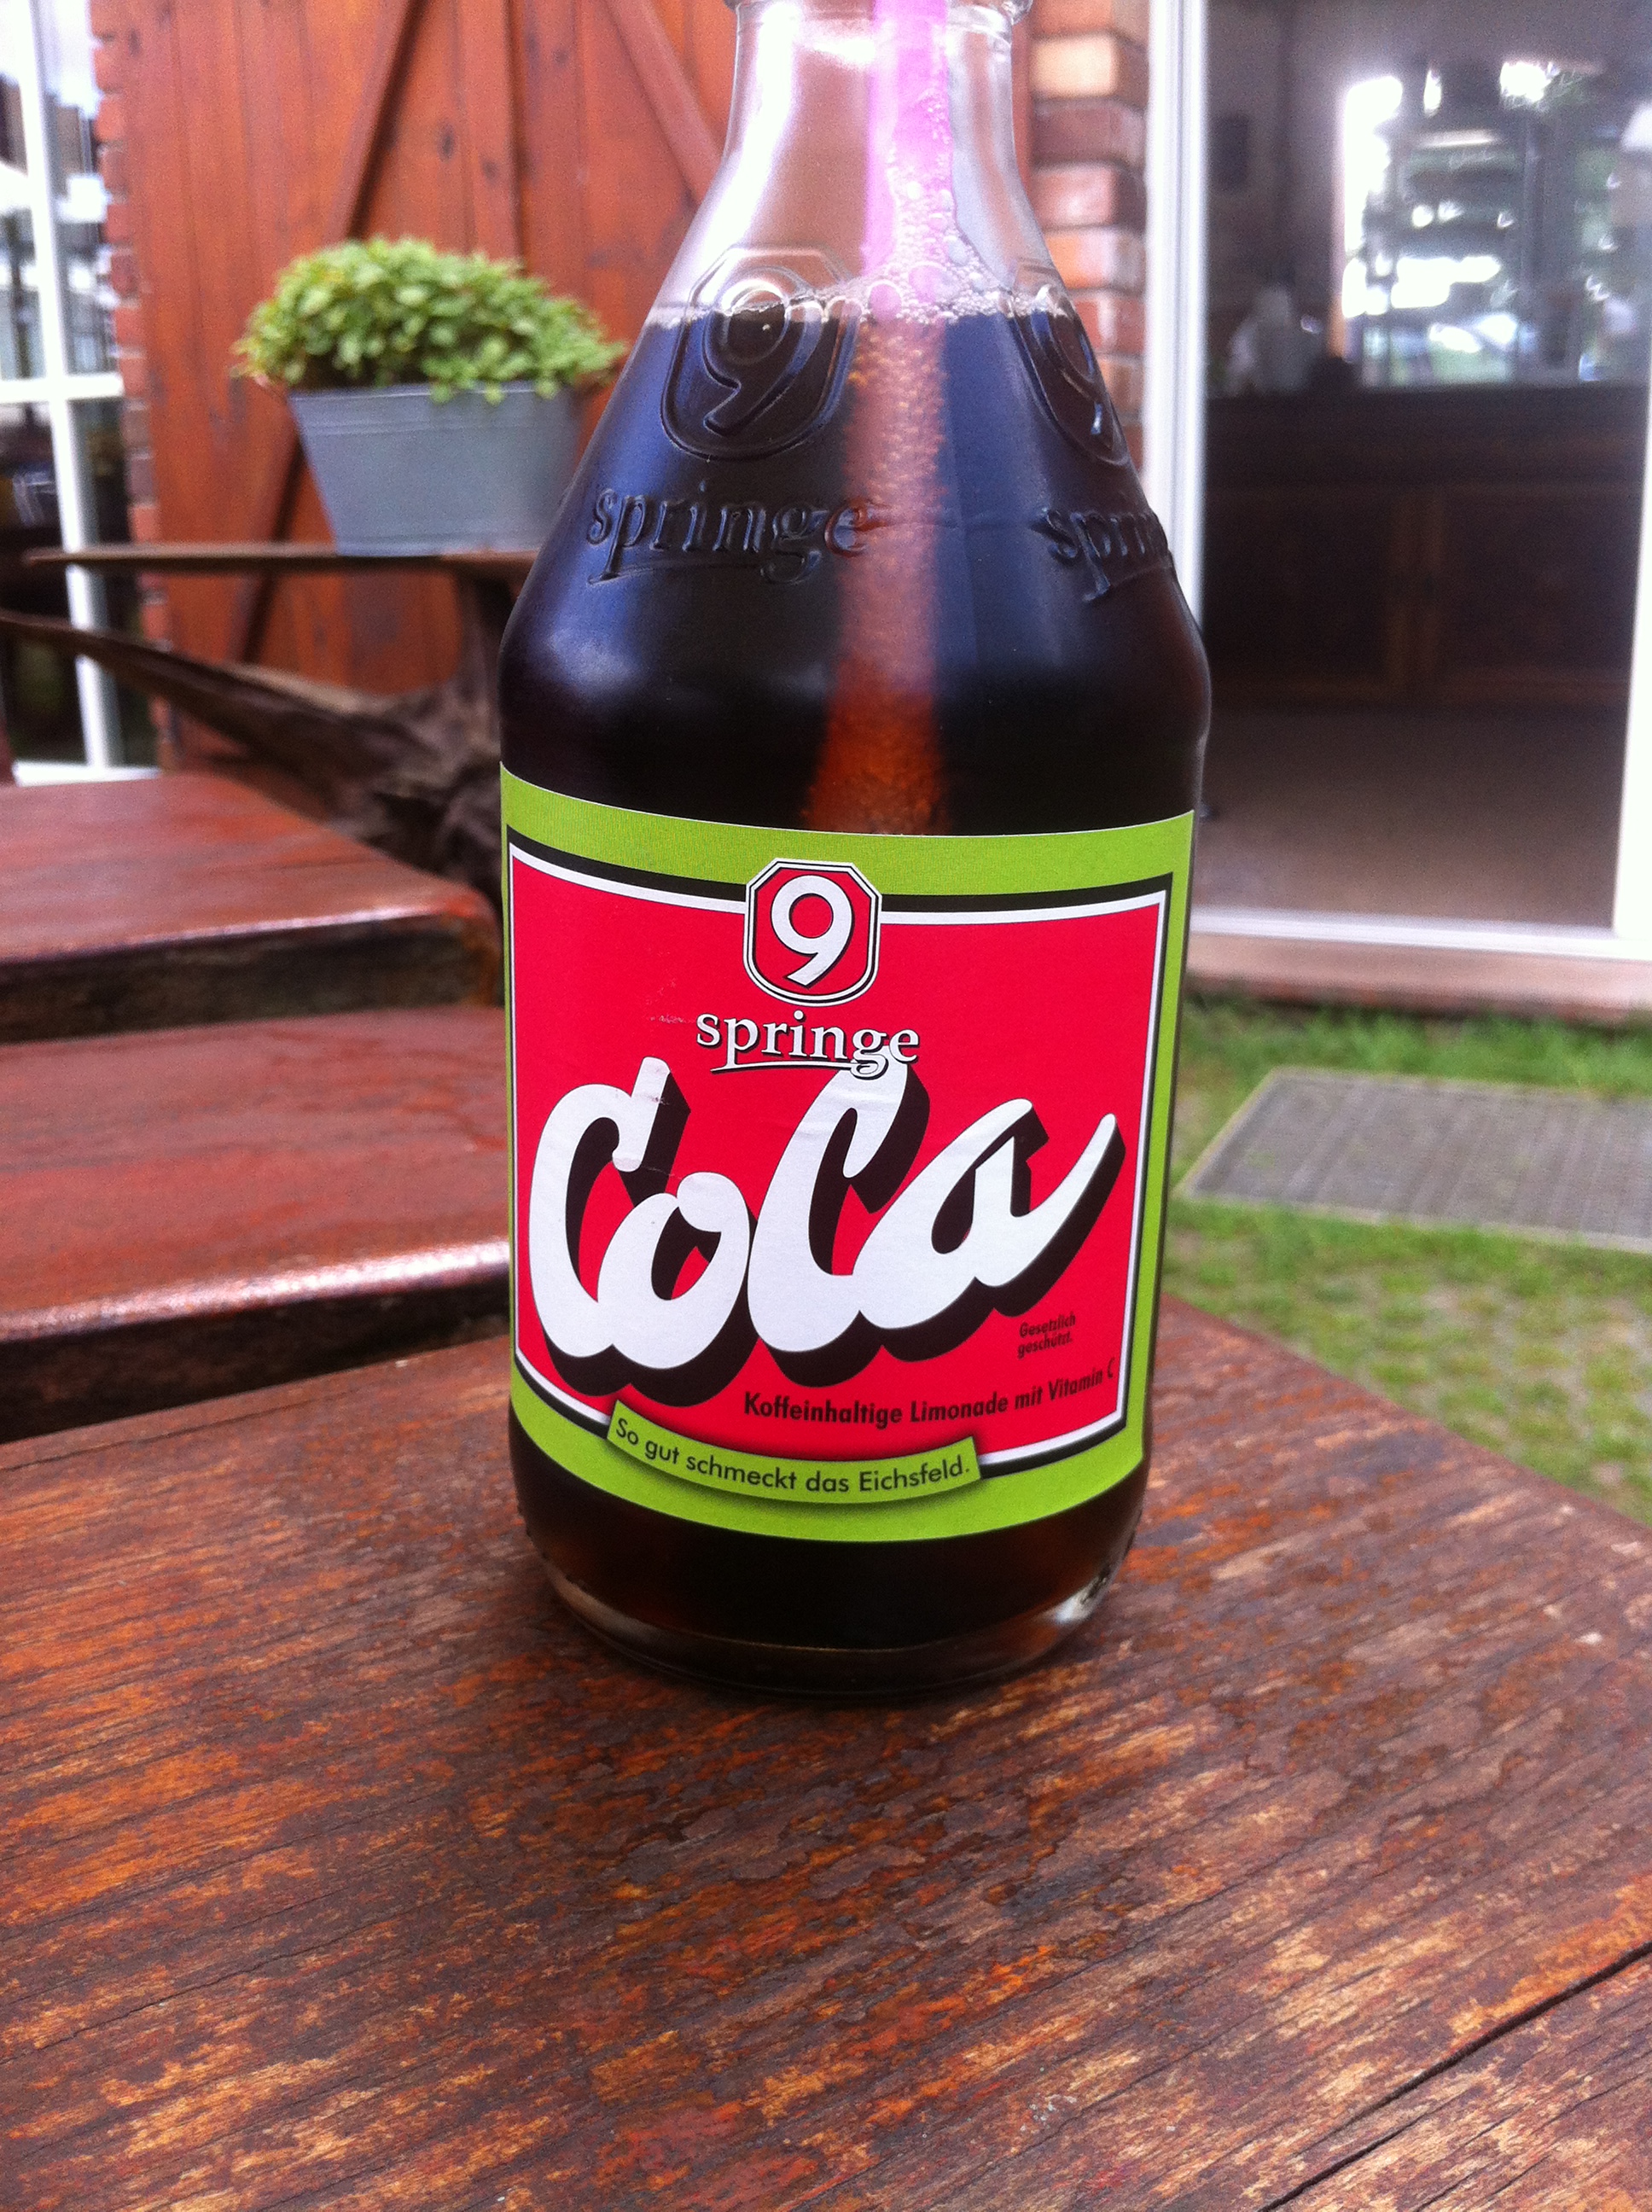 So gut schmeckt das Eichsfeld - Feldgieker schmeckt gut, die Cola nicht!